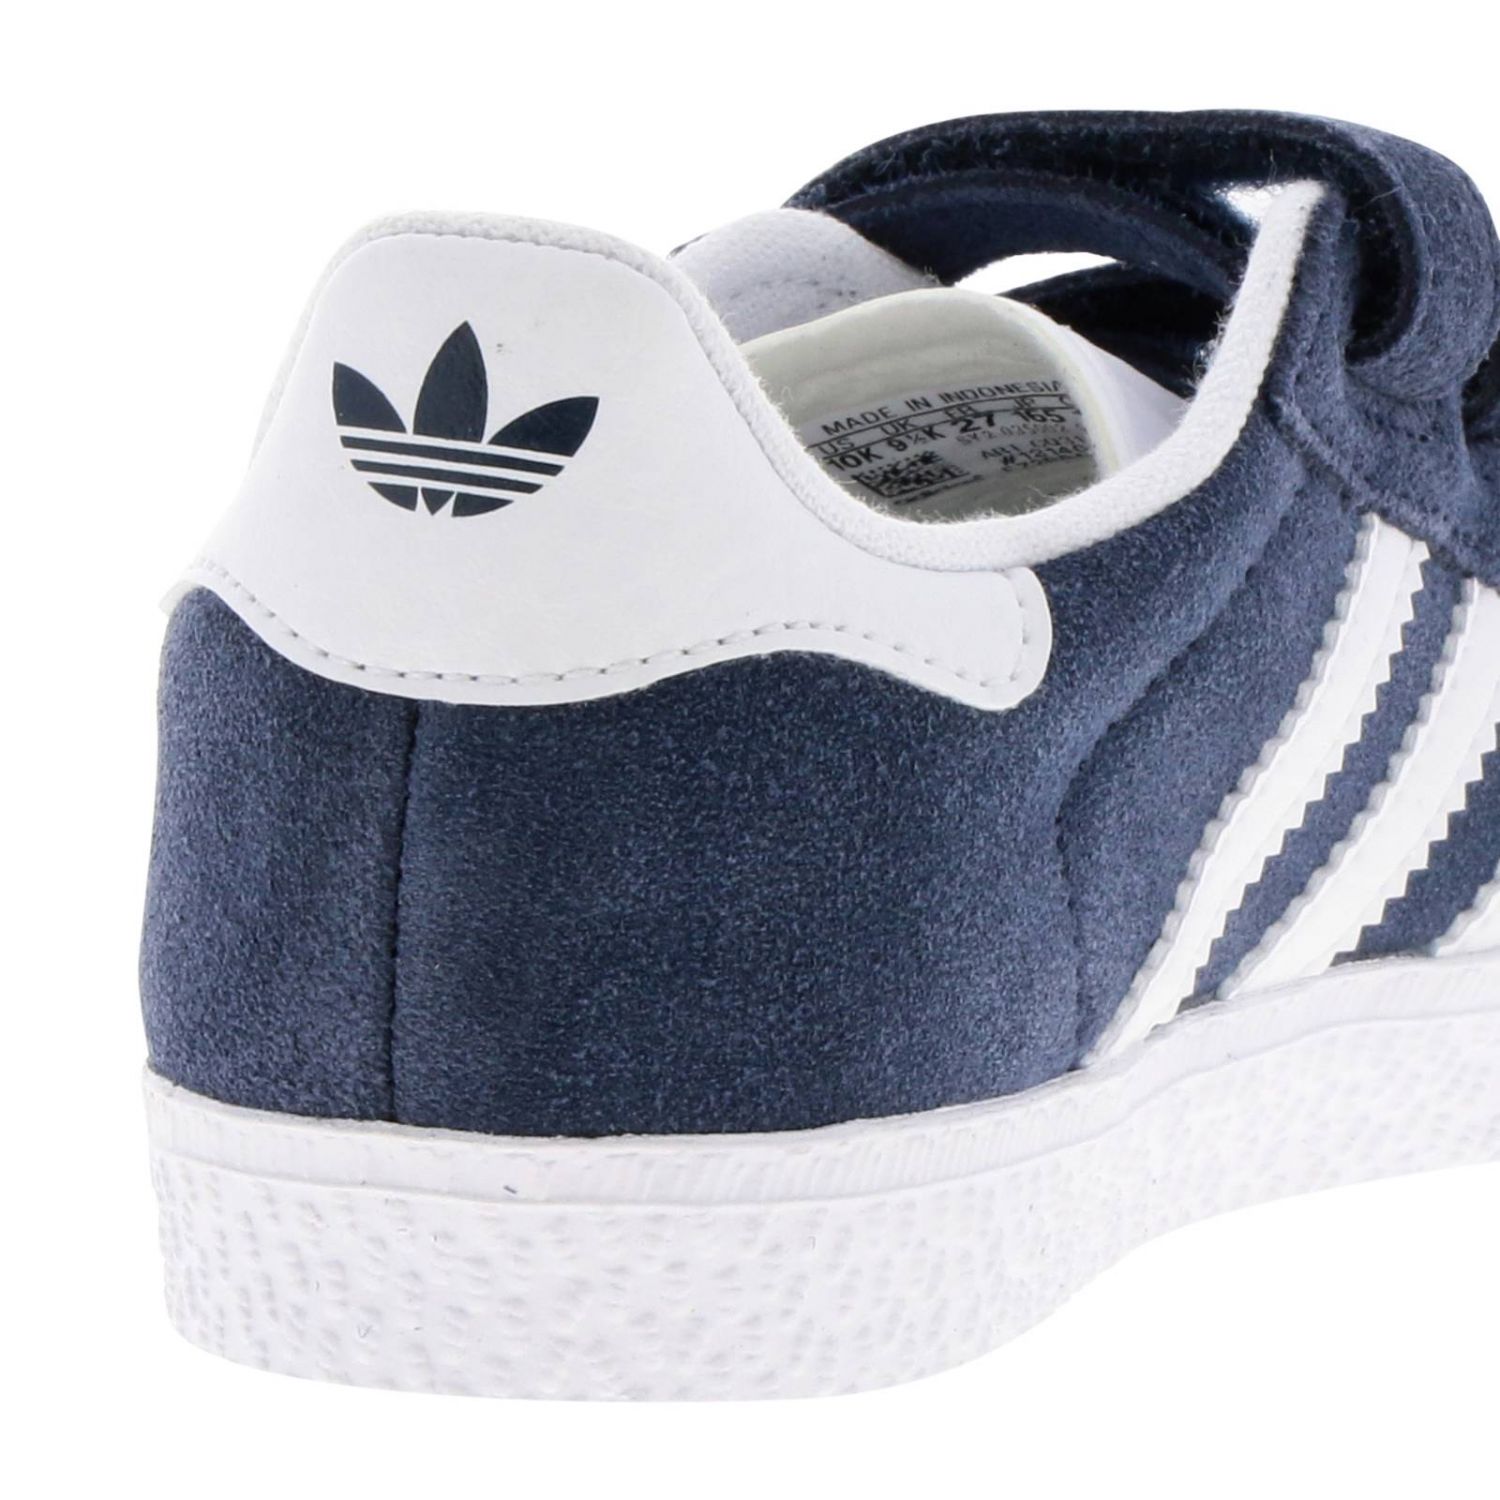 Adidas Originals Outlet: Shoes kids | Shoes Adidas Originals Kids Blue ...